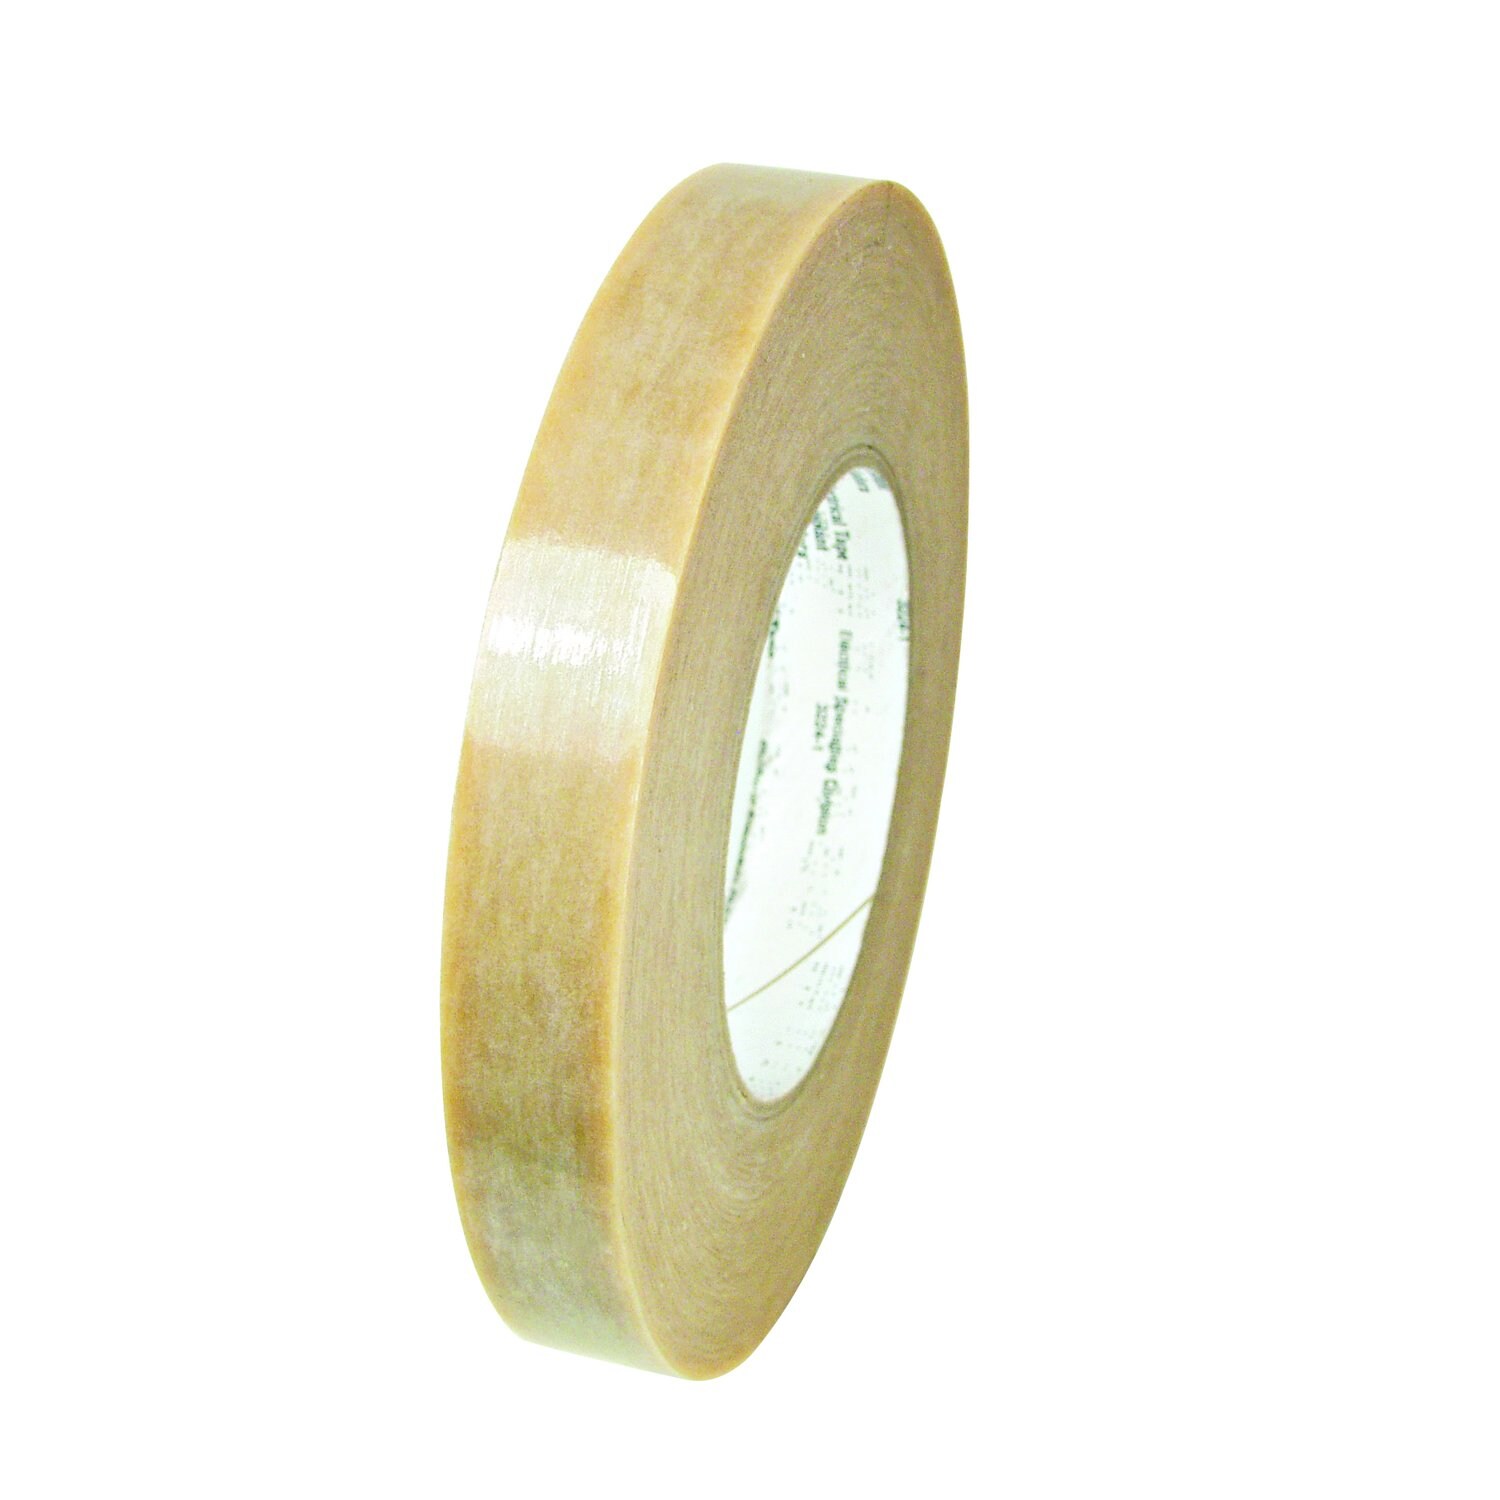 7010349945 - 3M Composite Film Electrical Tape 44, 1/2 in x 90 yd, 3 in Paper Core,
72 Rolls/Case